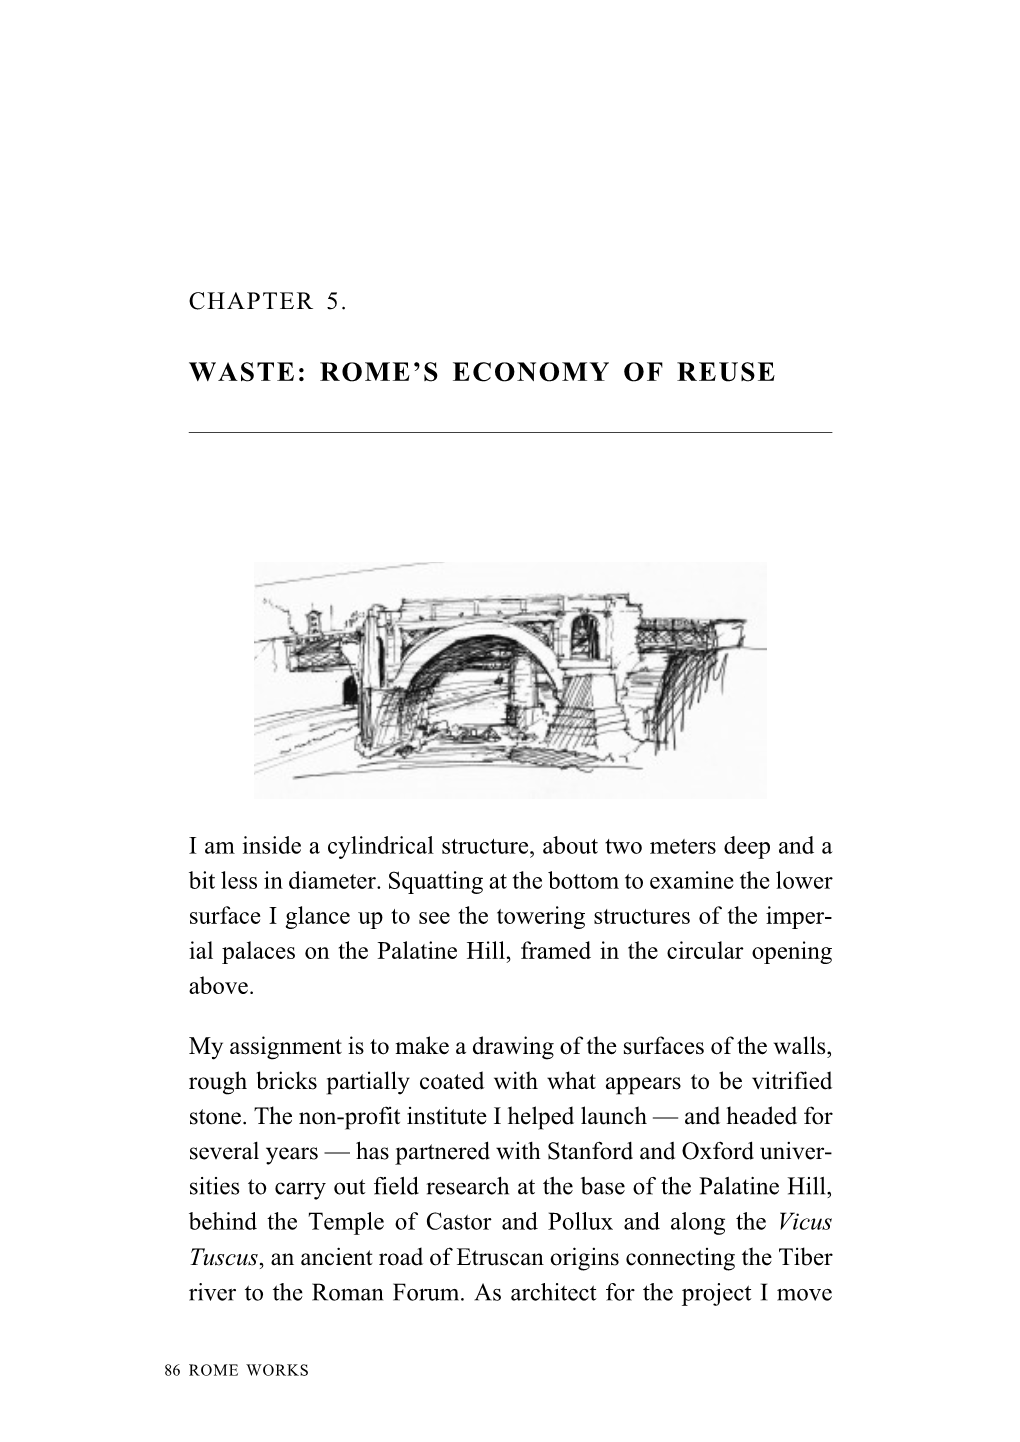 Waste: Rome's Economy of Reuse